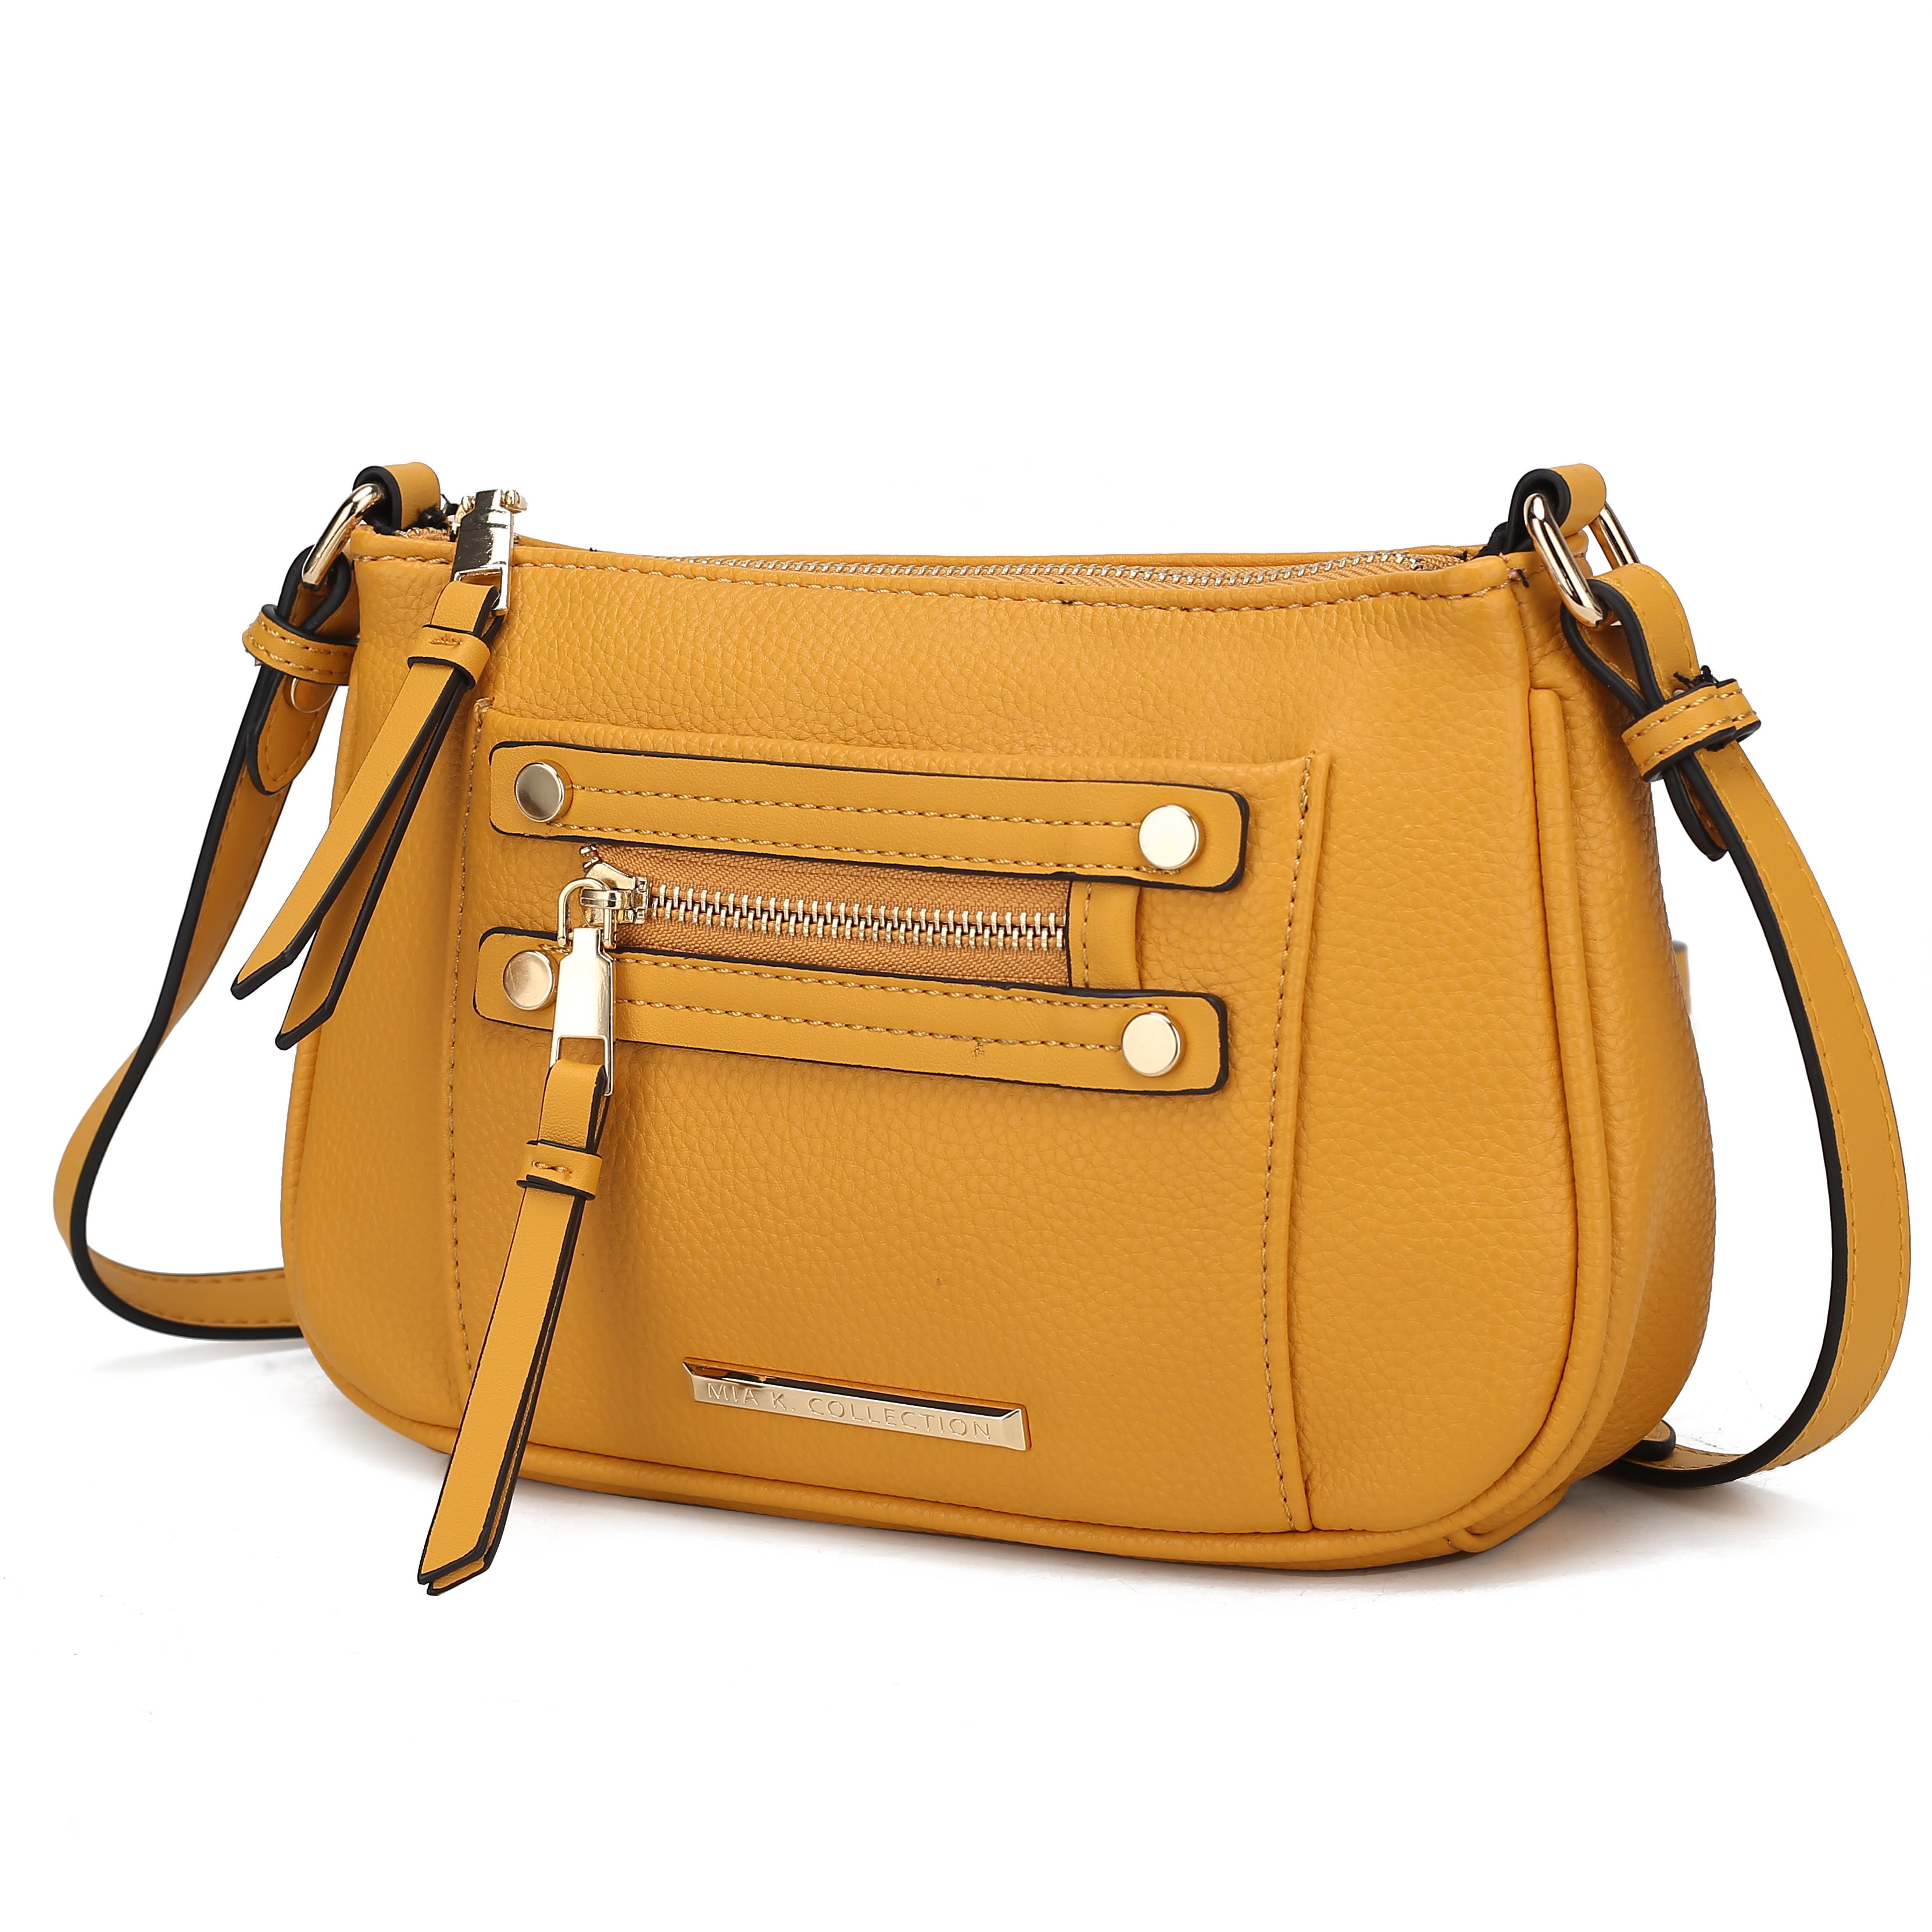 Adjustable Strap Handbag Wristlet Mia K Collection Crossbody Bags for Women Small PU Leather Messenger Purse 